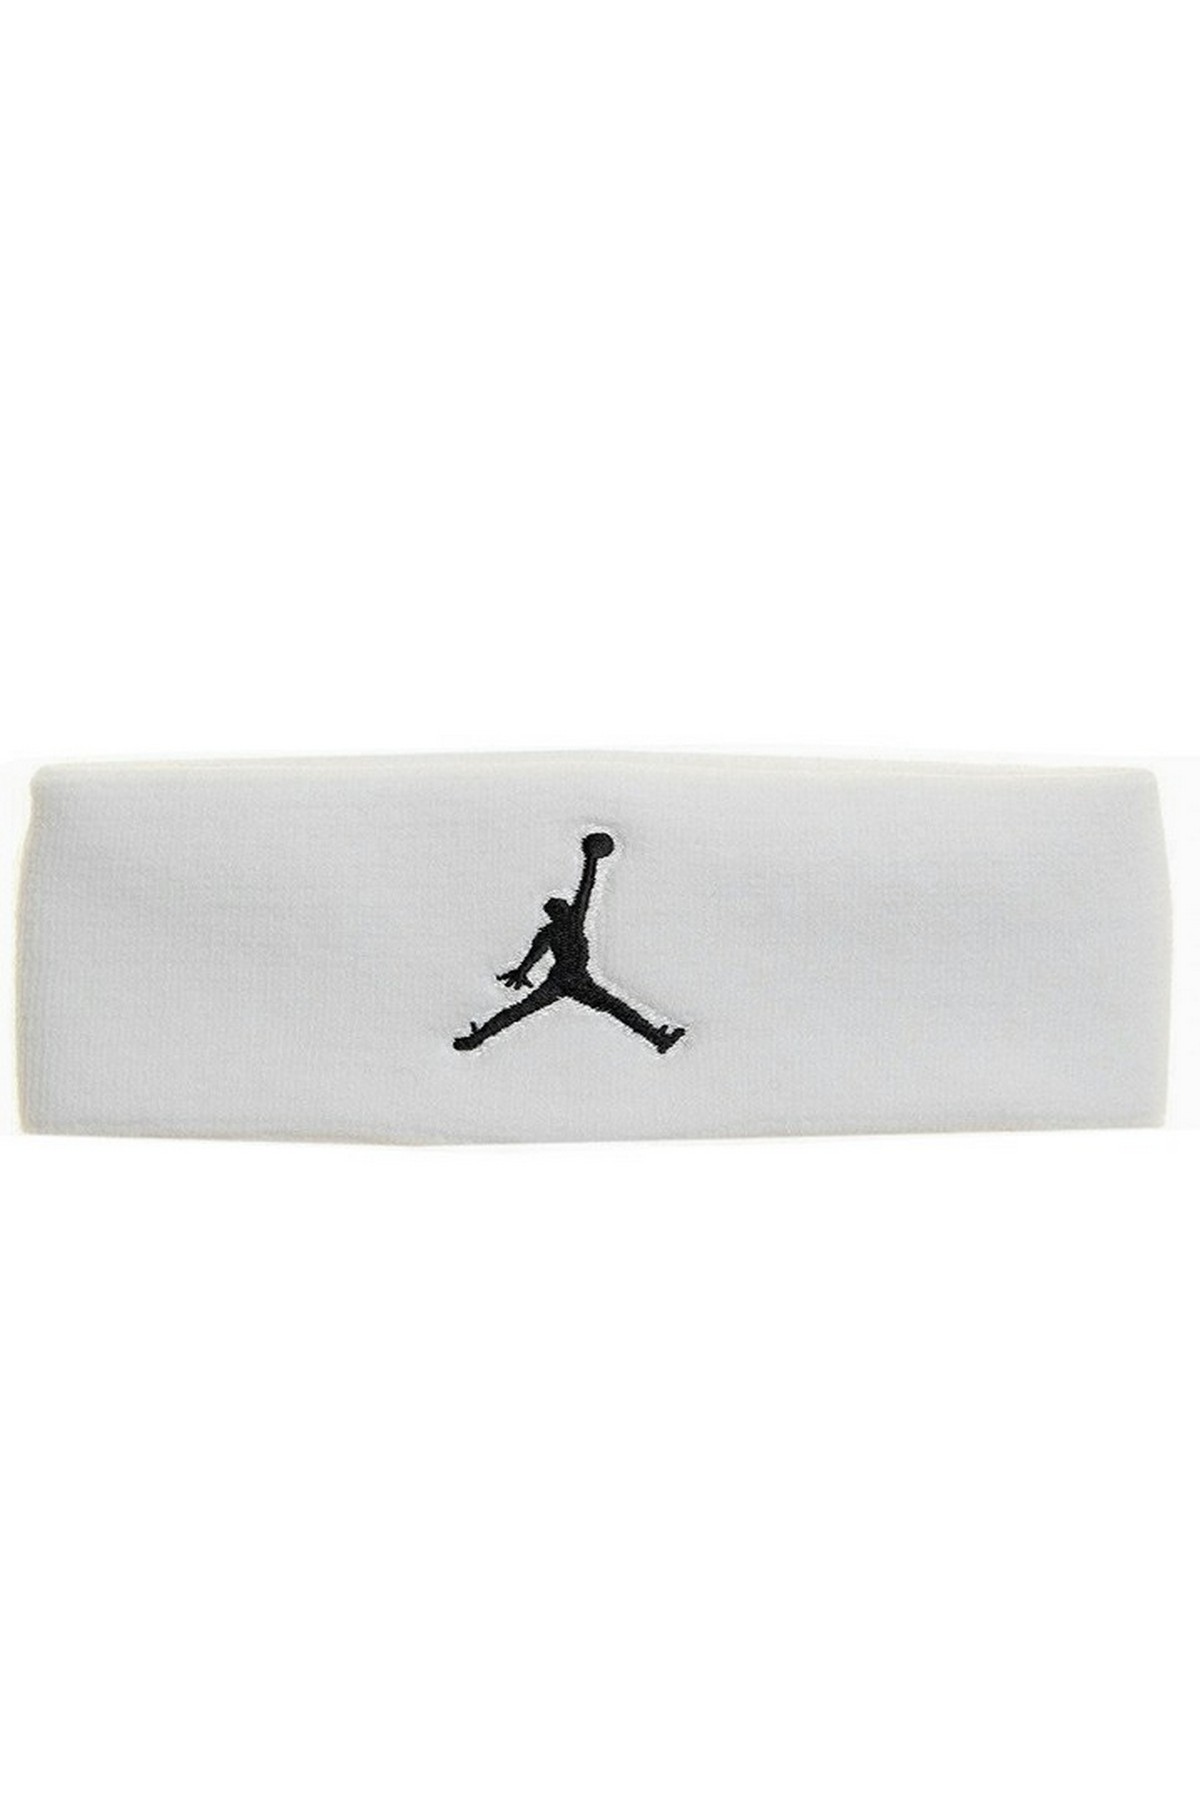 Nike J.KN.00 - Jordan Jumpman Beyaz Kafa Bandı